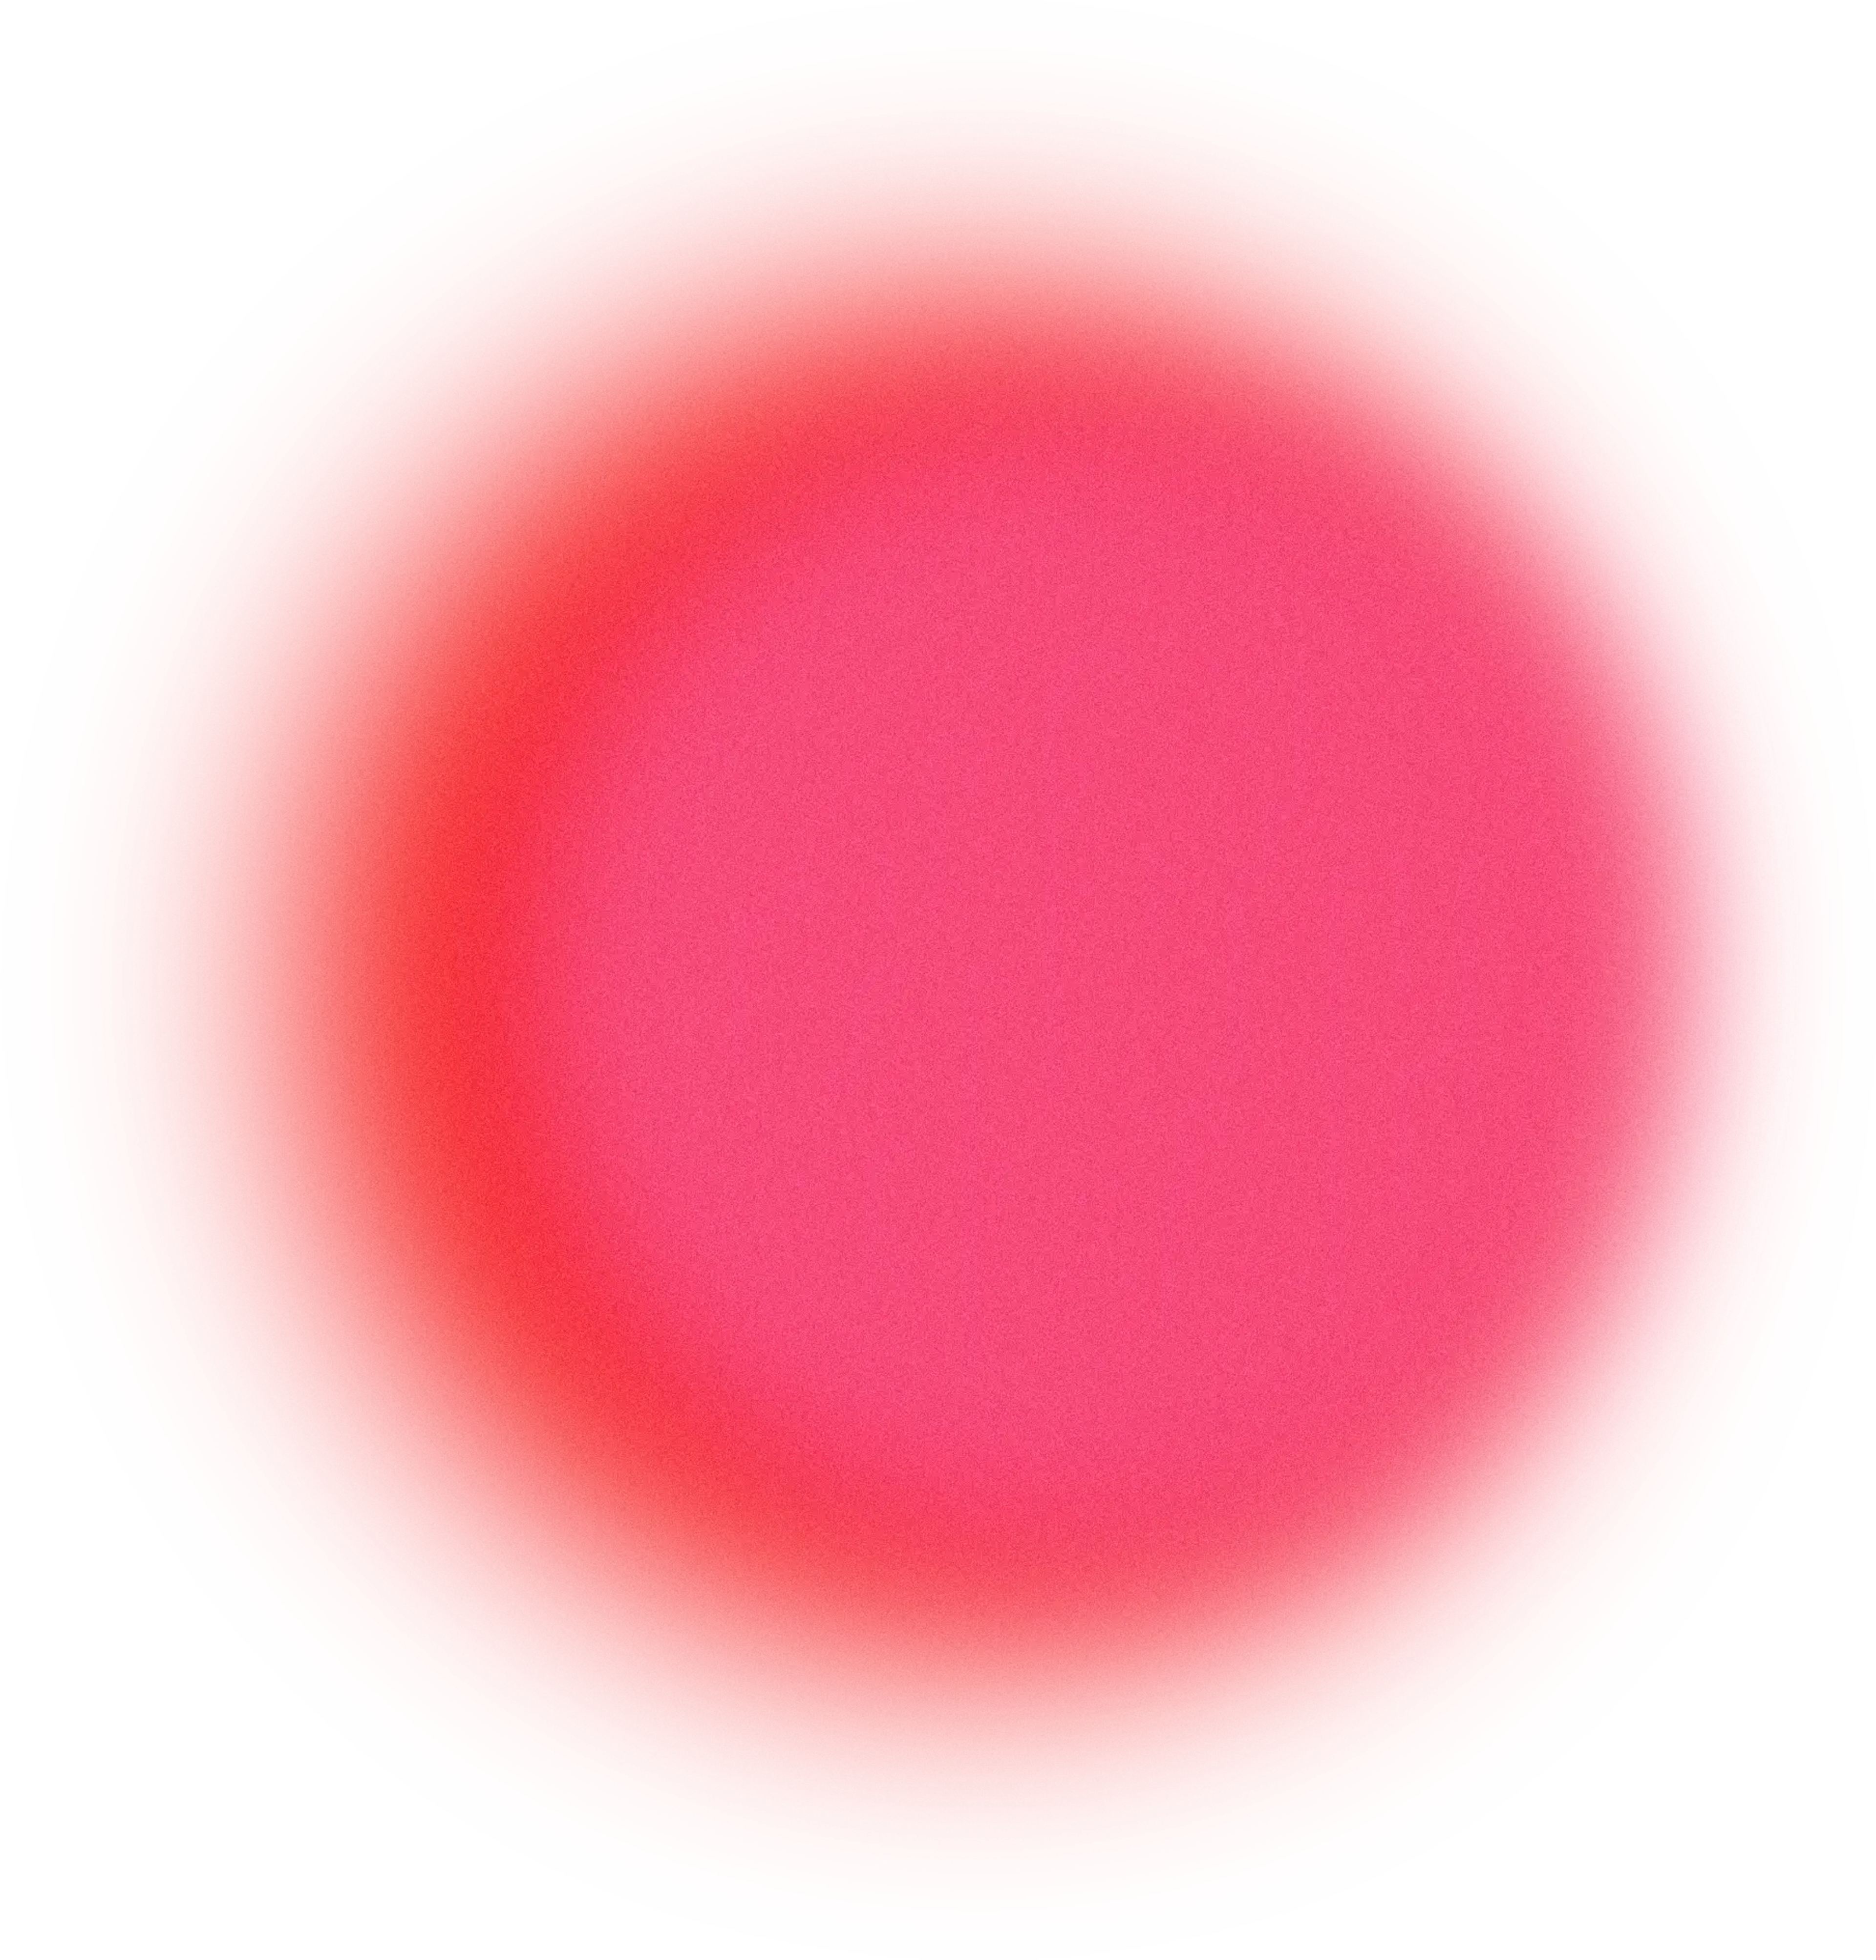 blured sphere